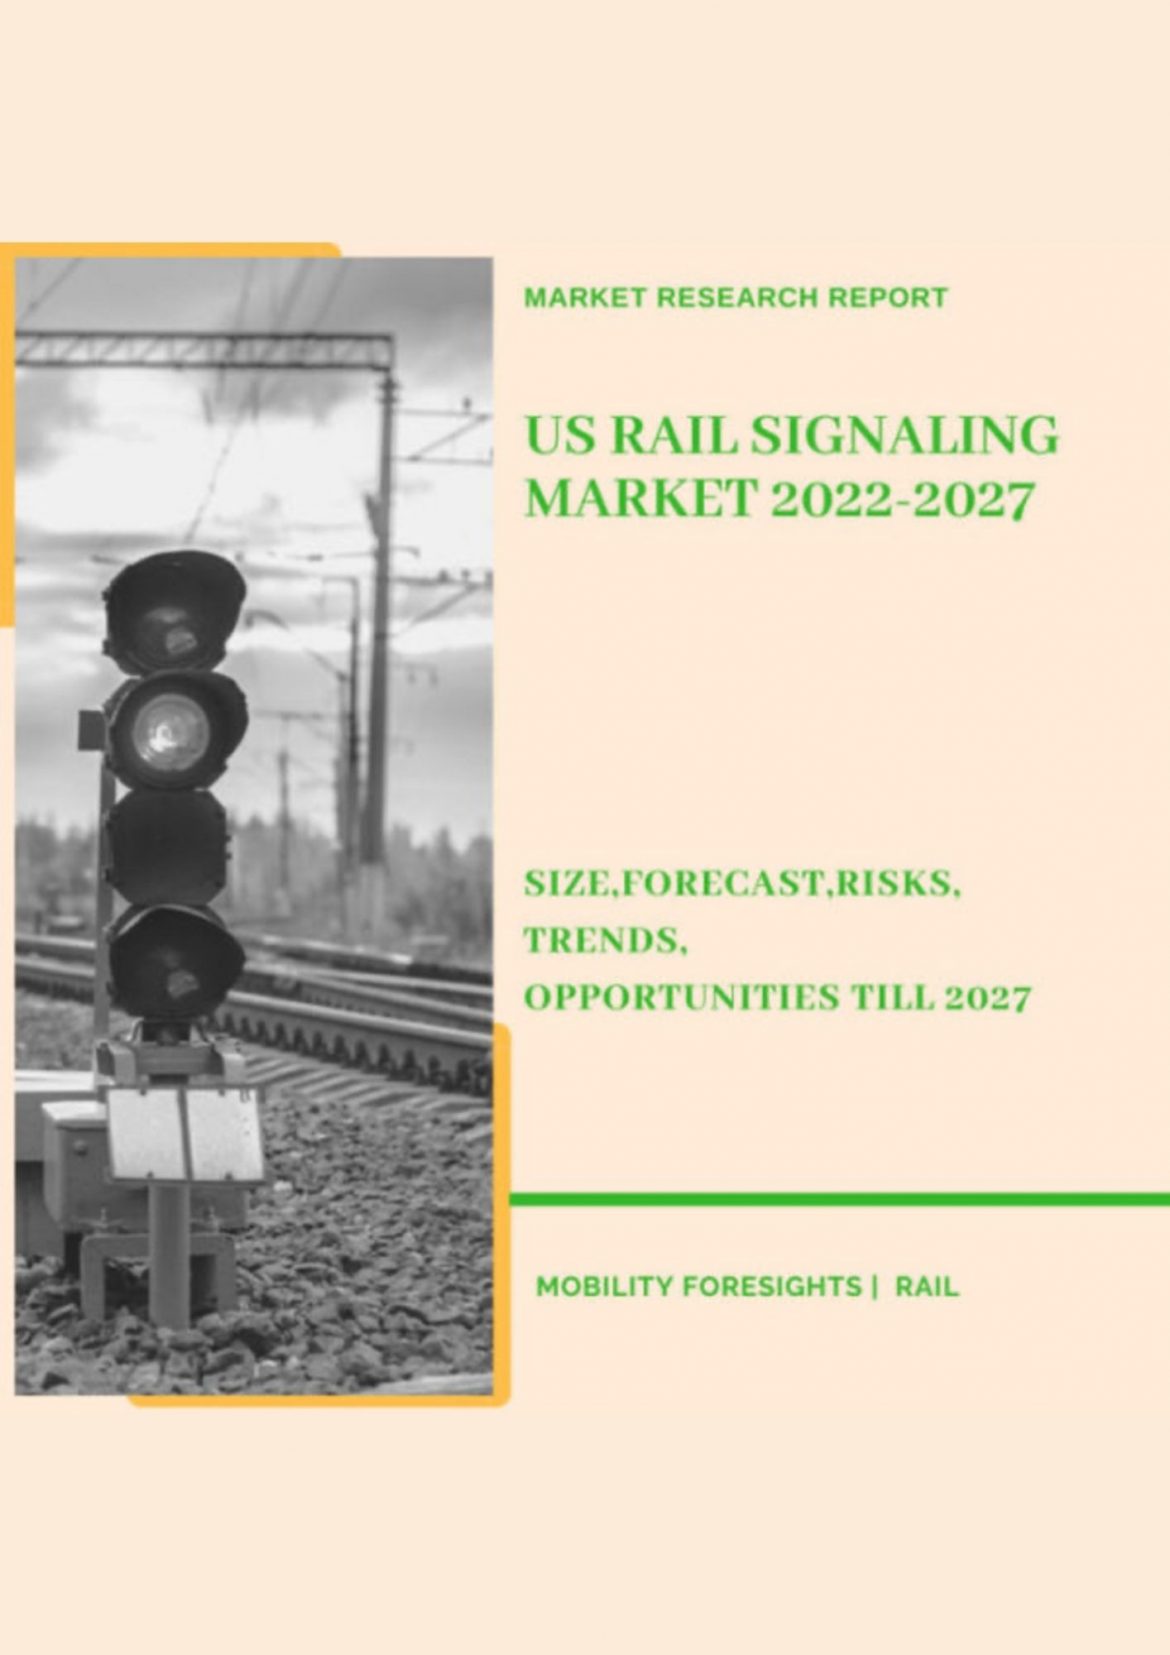 US Rail Signaling Market 2022-2027